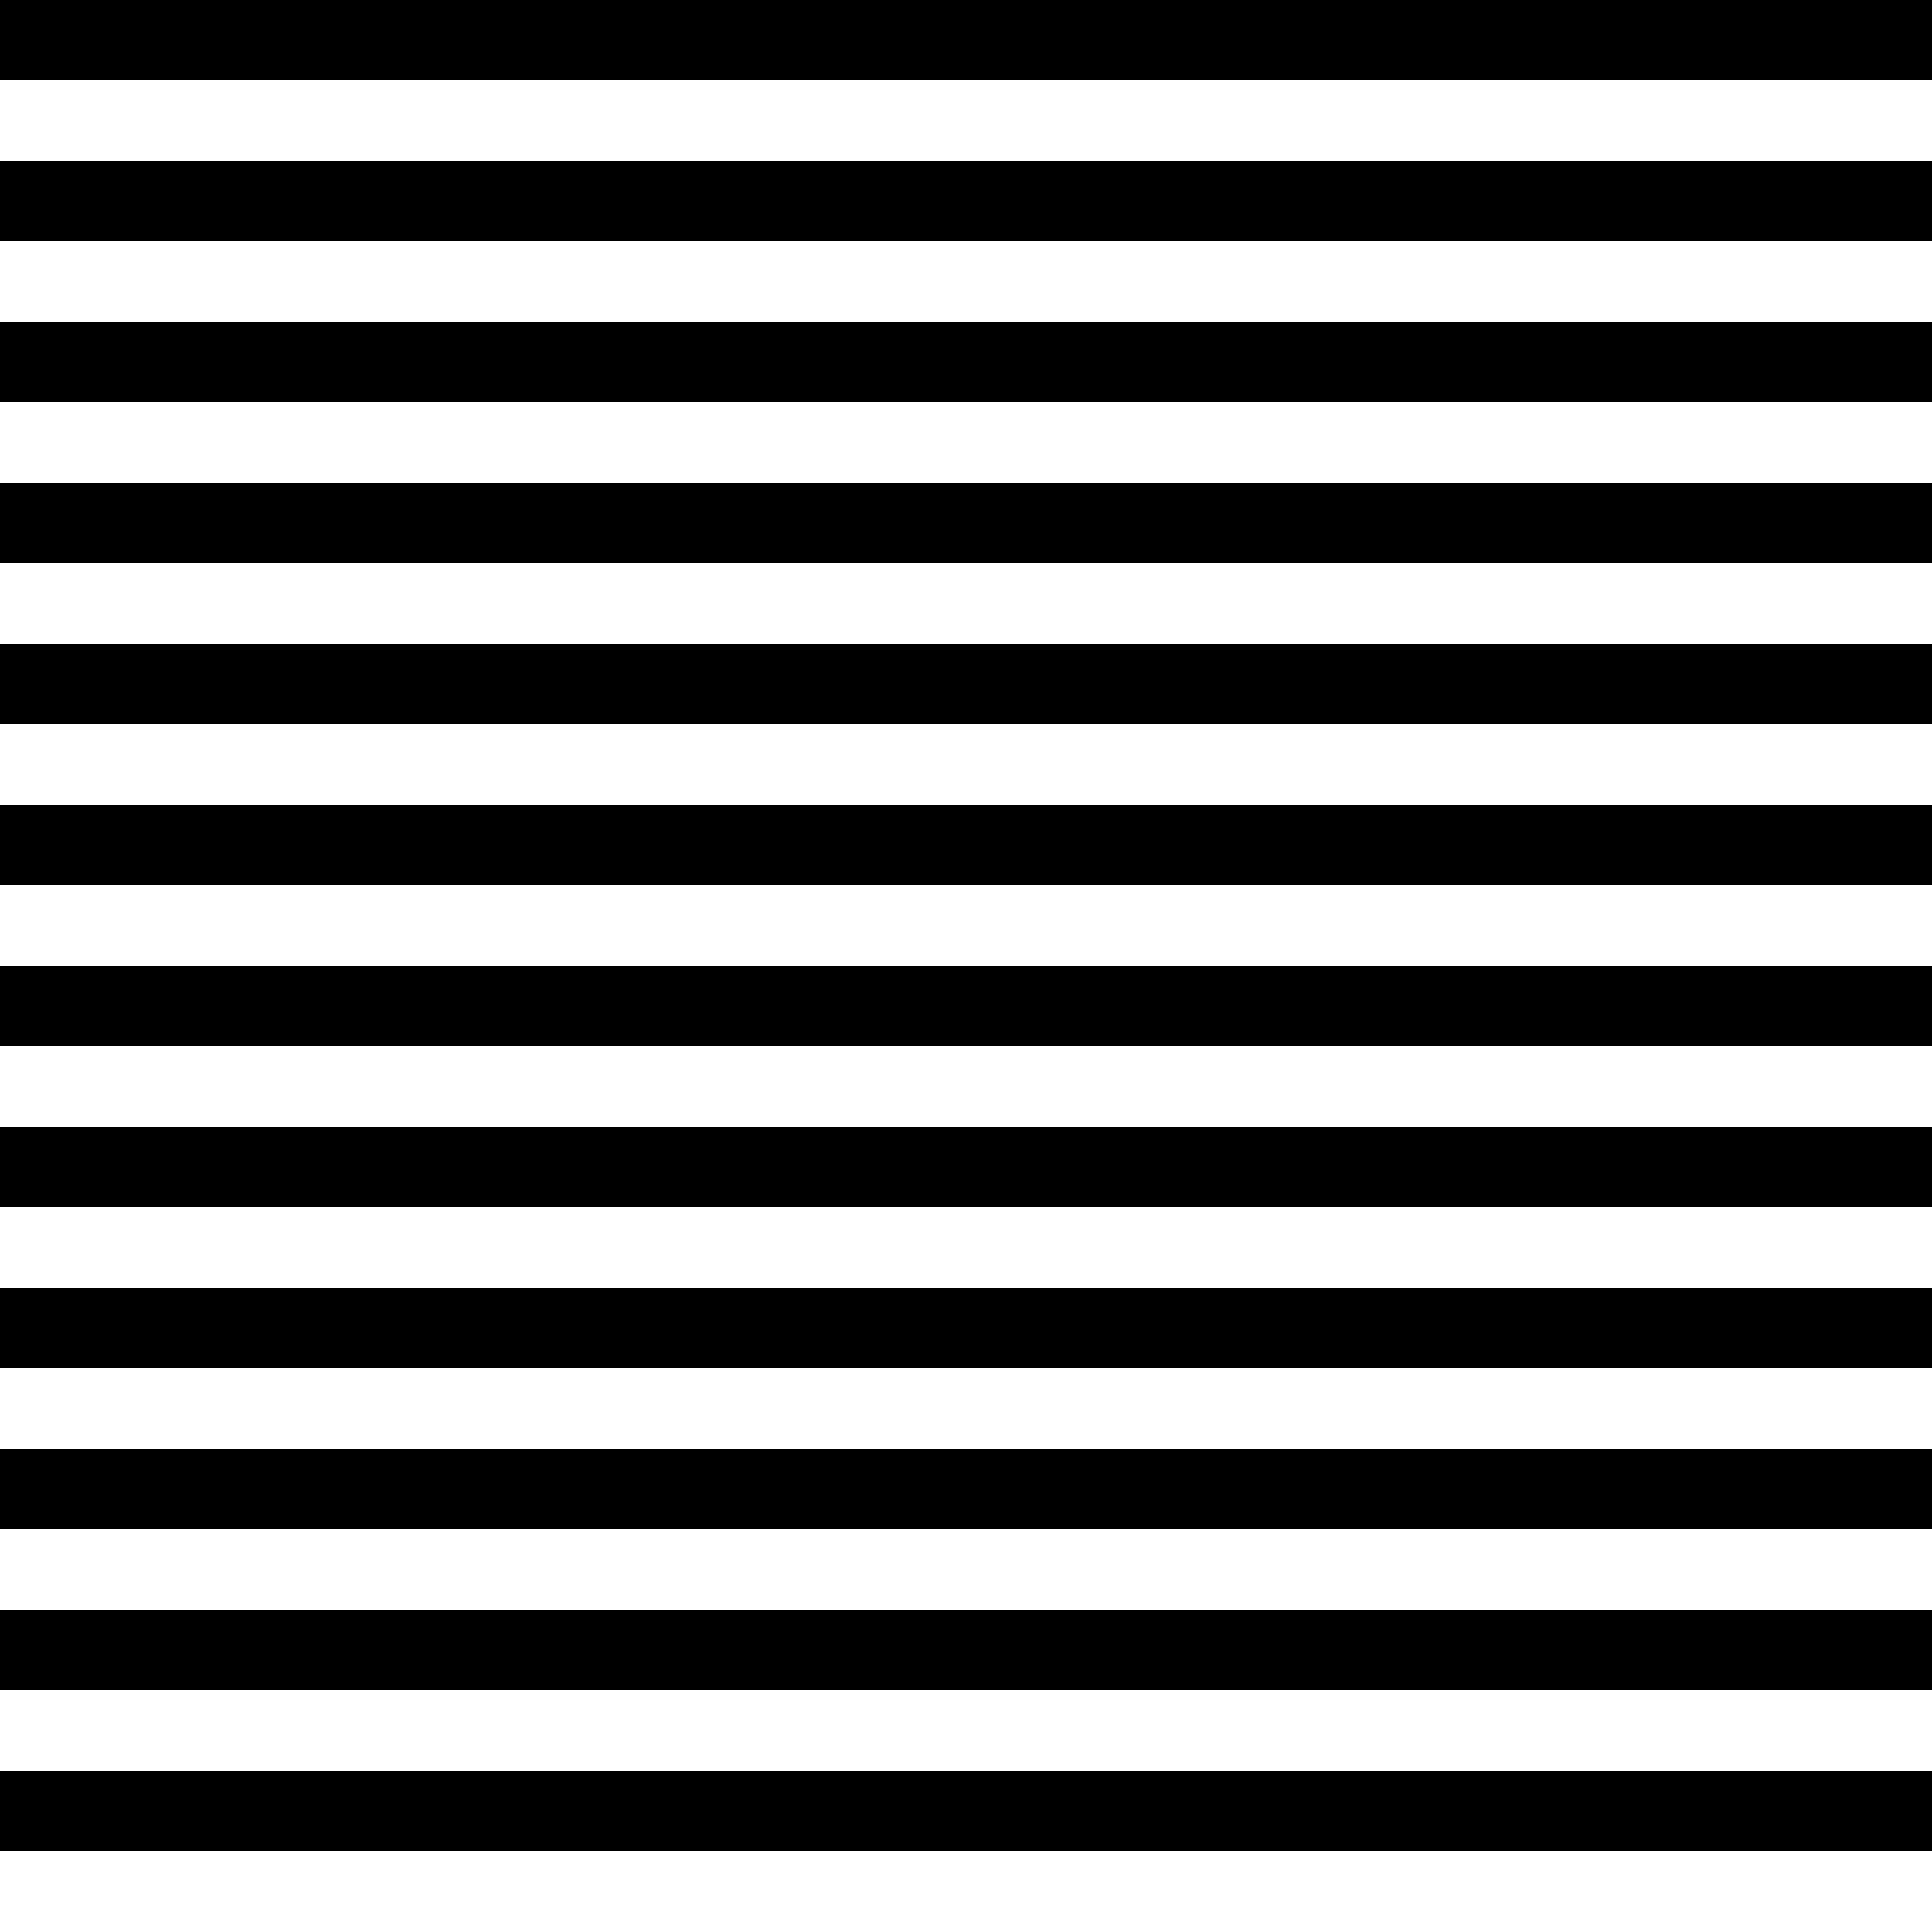 Black and White Striped Pattern   Free Clip Art